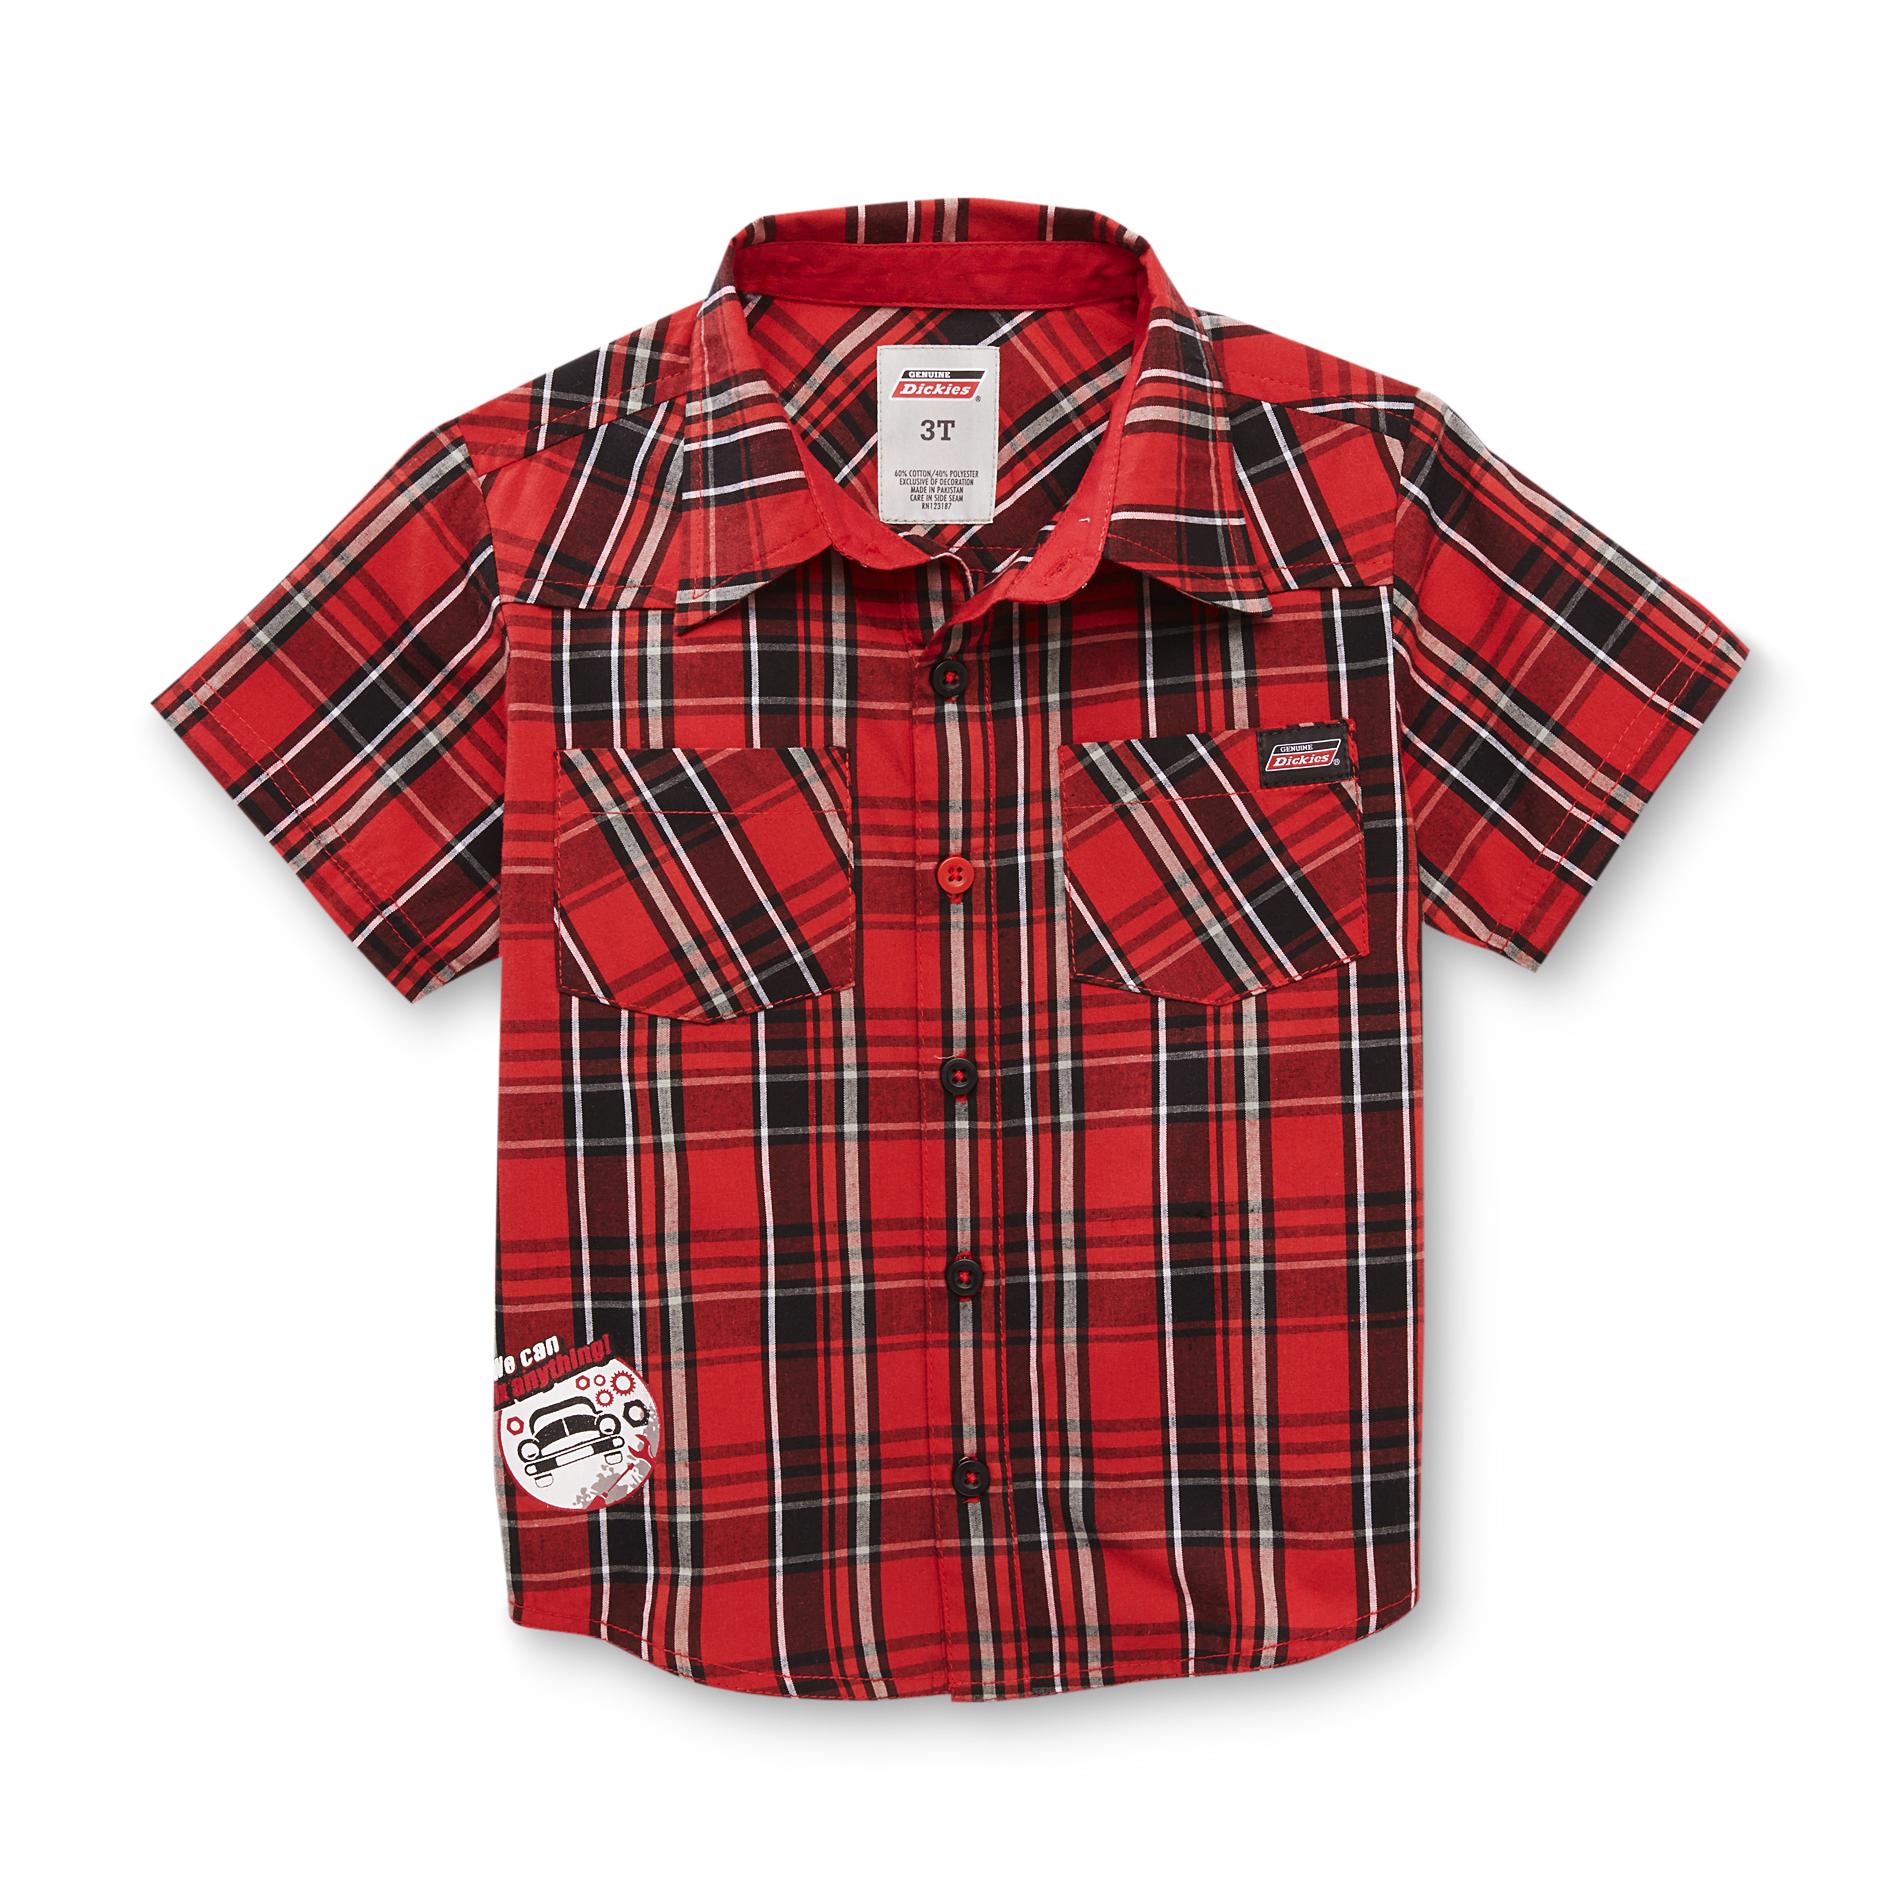 Dickies Toddler Boy's Woven Shirt - Plaid